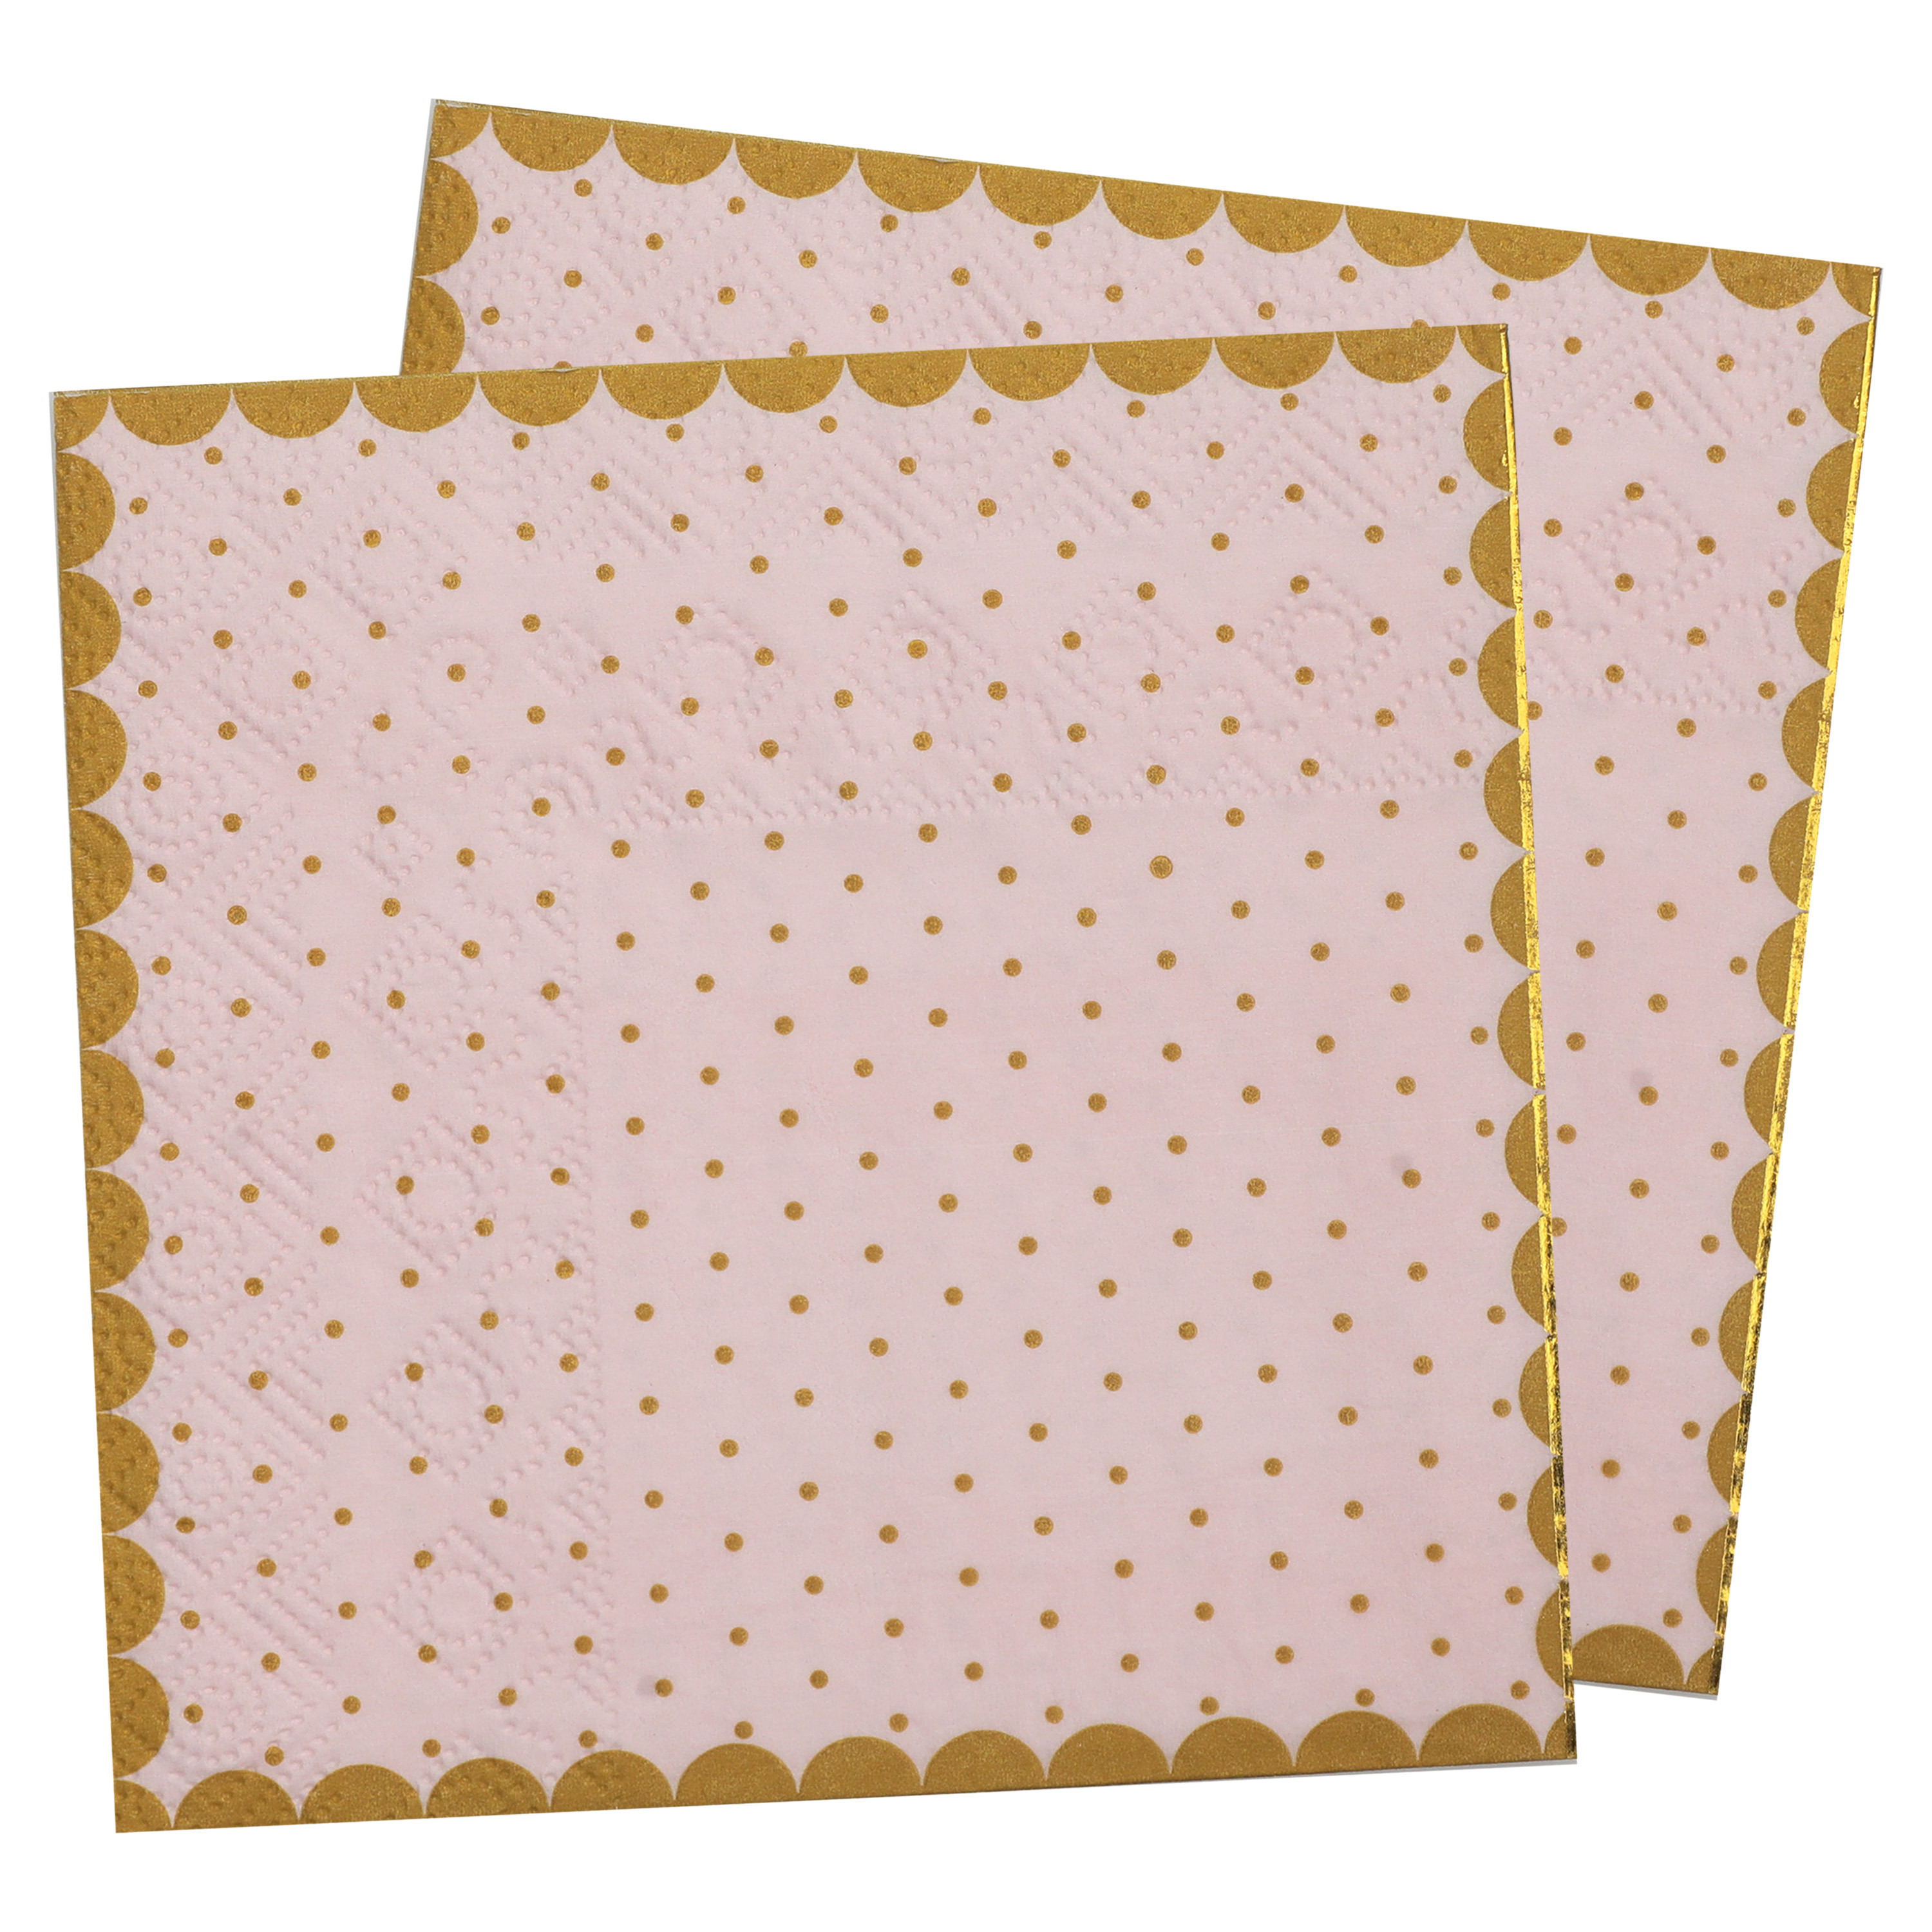 Santex feest servetten stippen 40x stuks 25 x 25 cm papier roze-goud